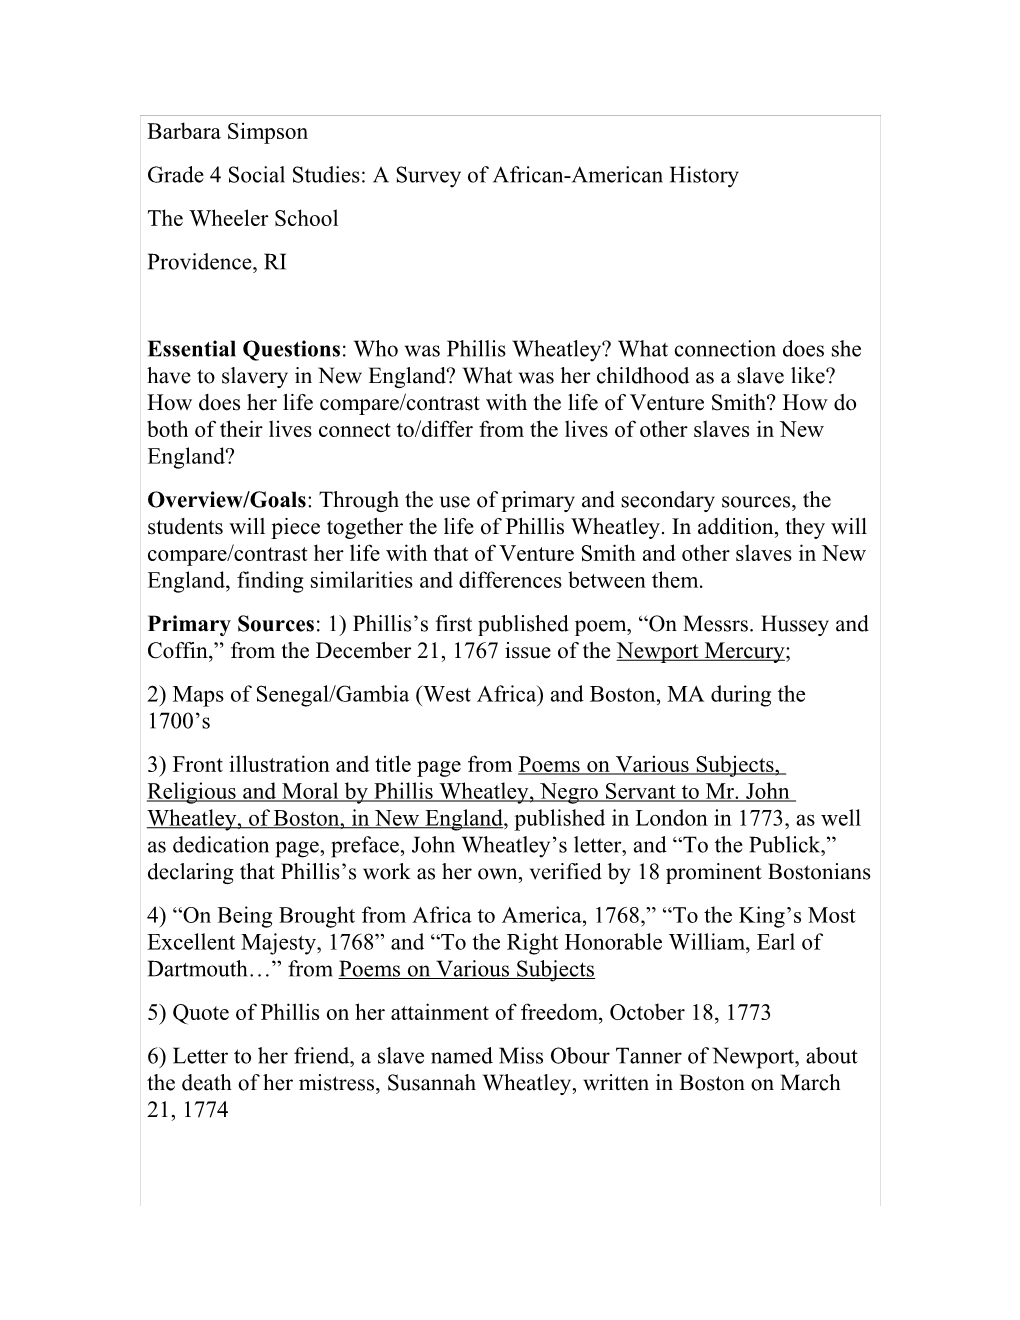 Grade 4 Social Studies: a Survey of African-American History